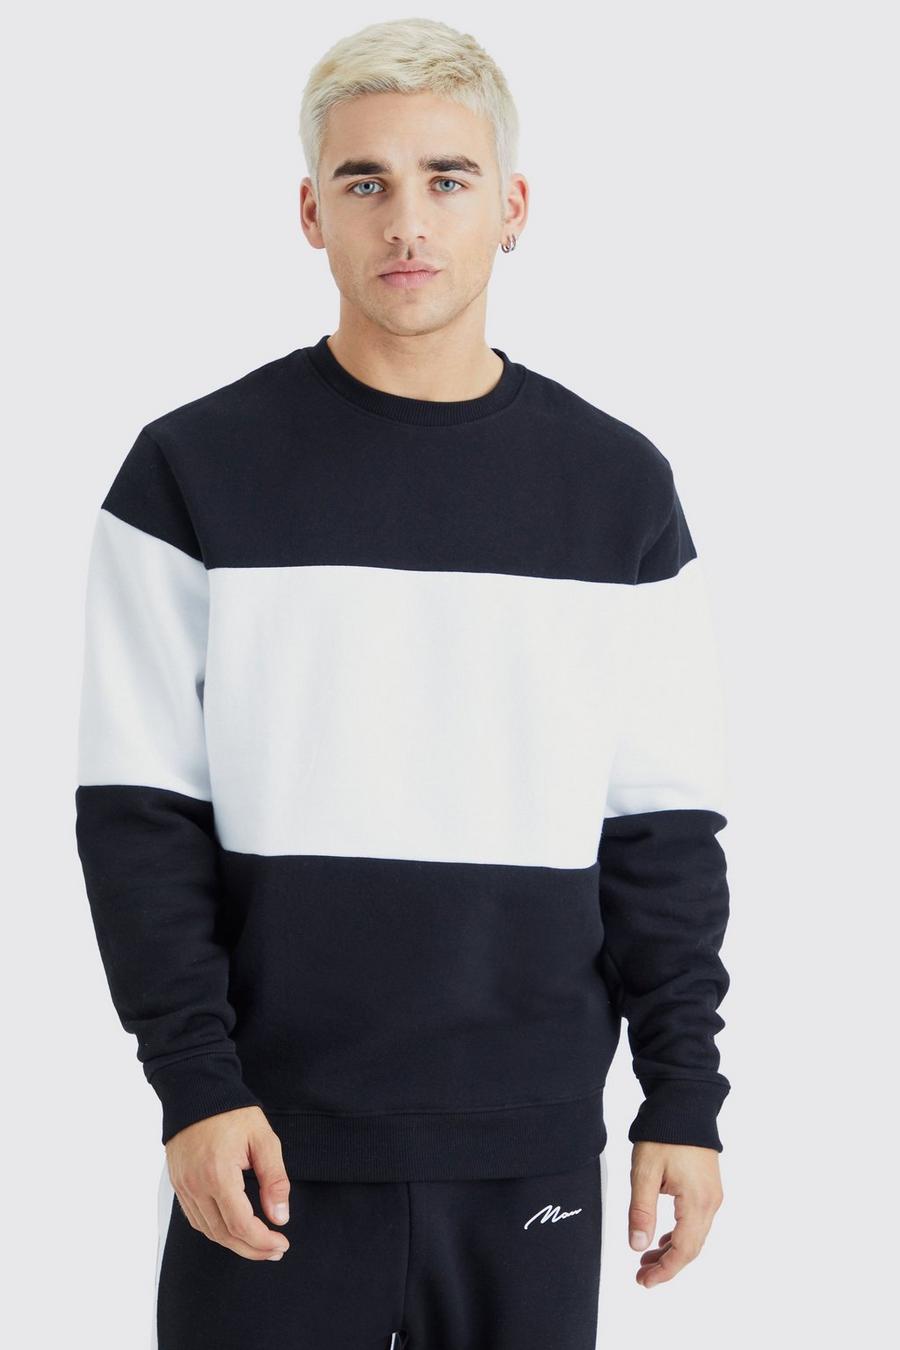 Black Colour Block Sweater